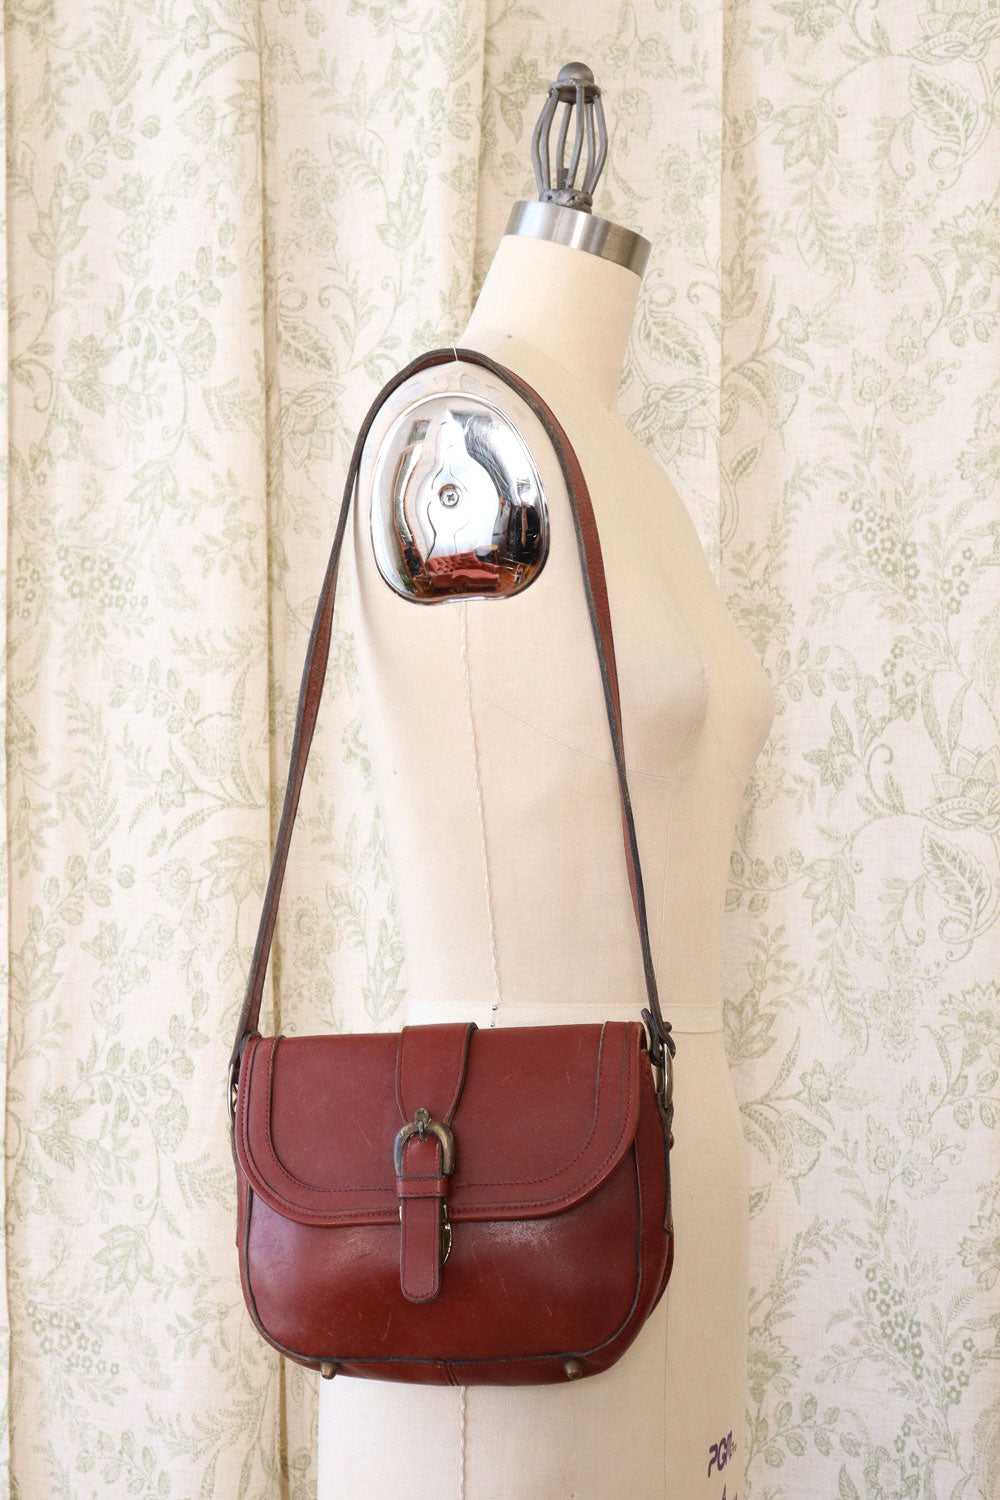 Aigner Aubergine Leather Bag - image 4